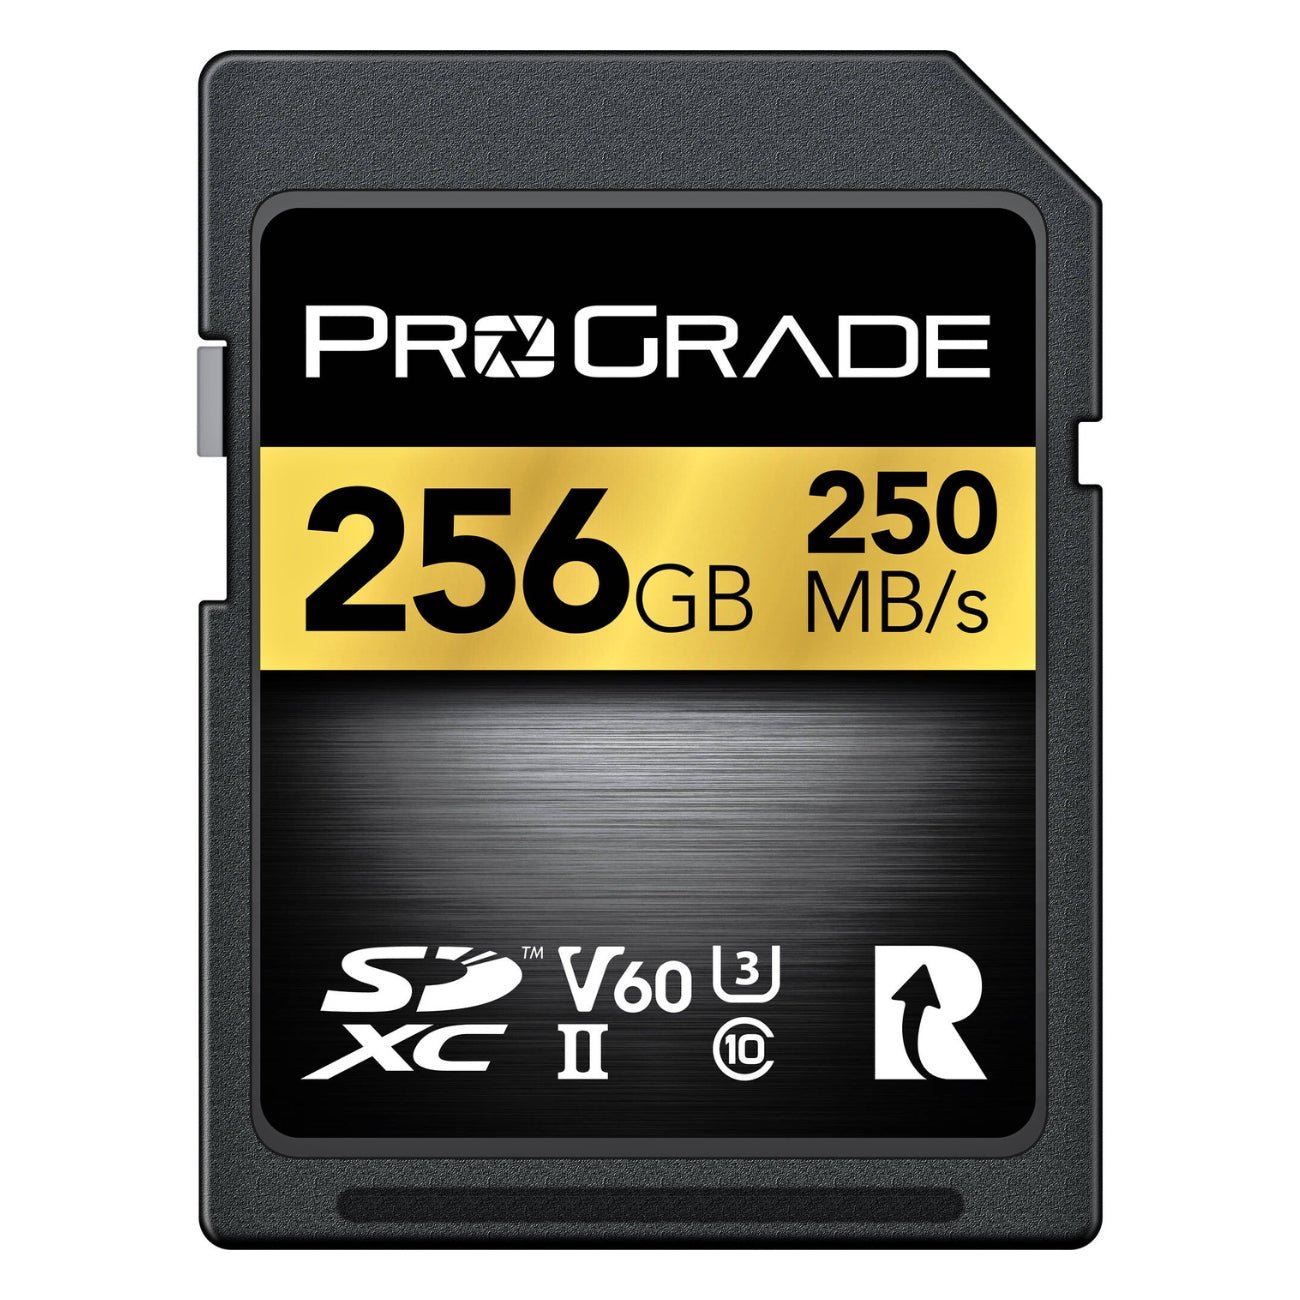 ProGrade Digital SDXC UHS-II V60 250R Memory Card - 256GB / sdxc card 256gb